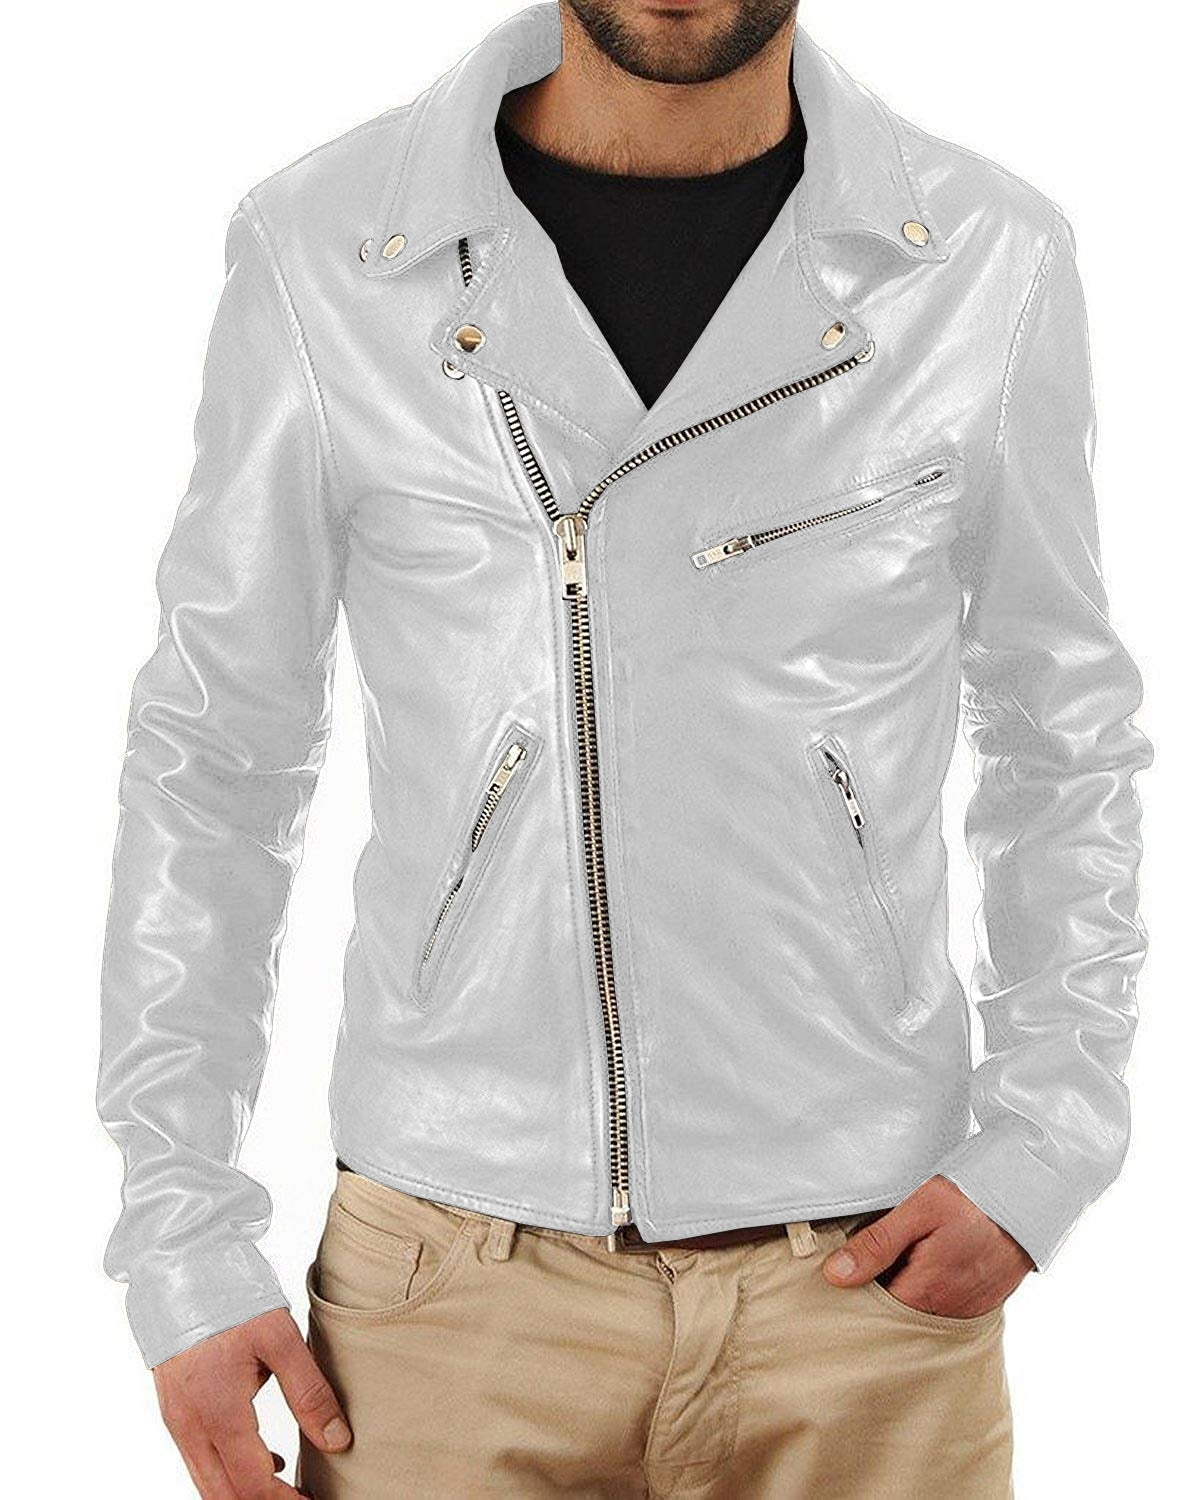 Leather Jackets Hub Mens Genuine Lambskin Leather Jacket (Black, Rocker Jacket) - 1501325